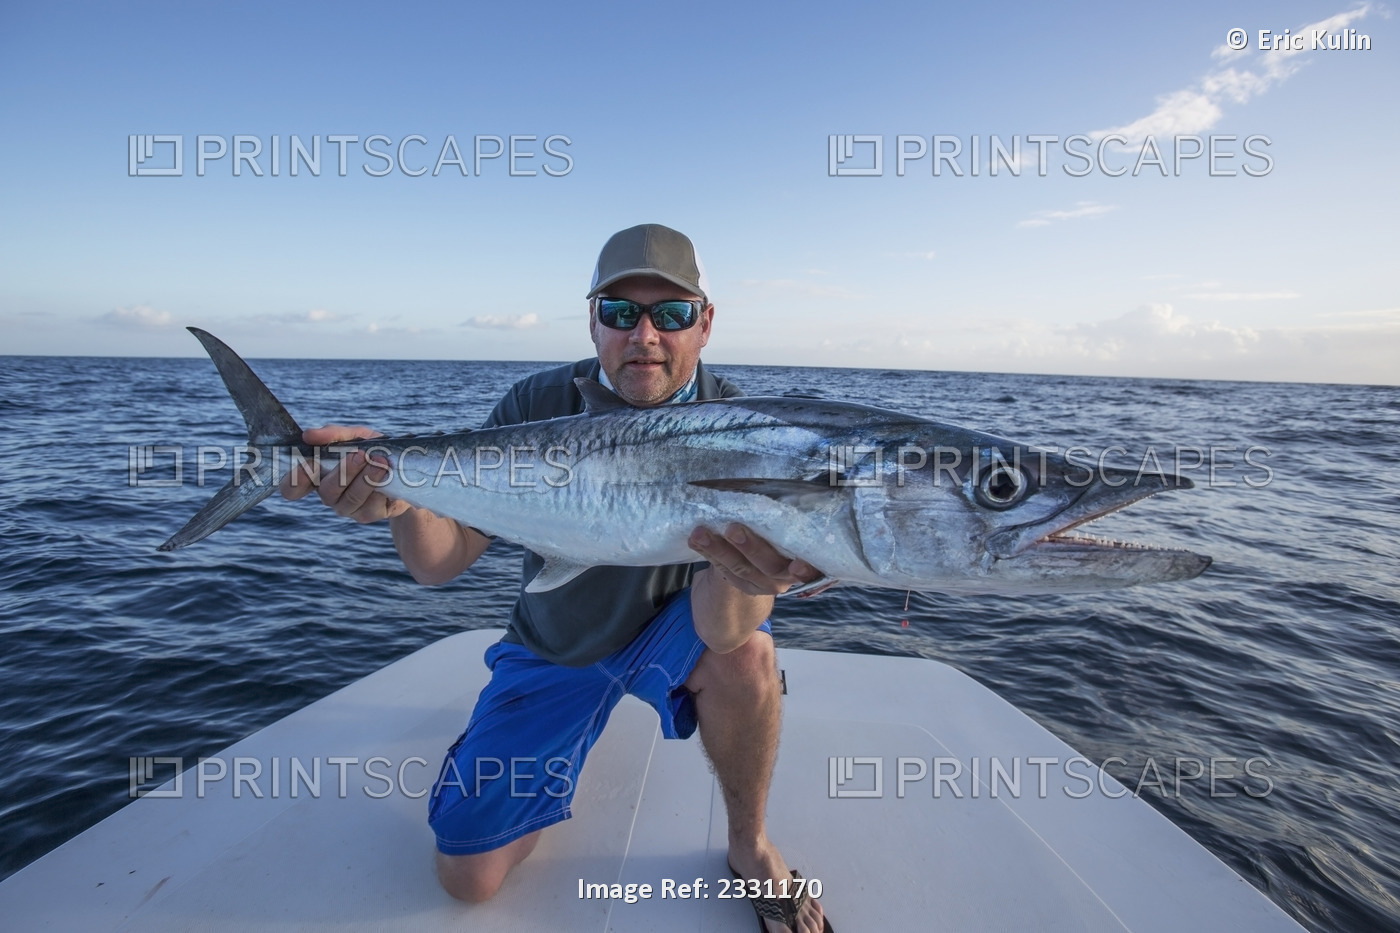 Man holding a large fresh caught fish; Puerto rico